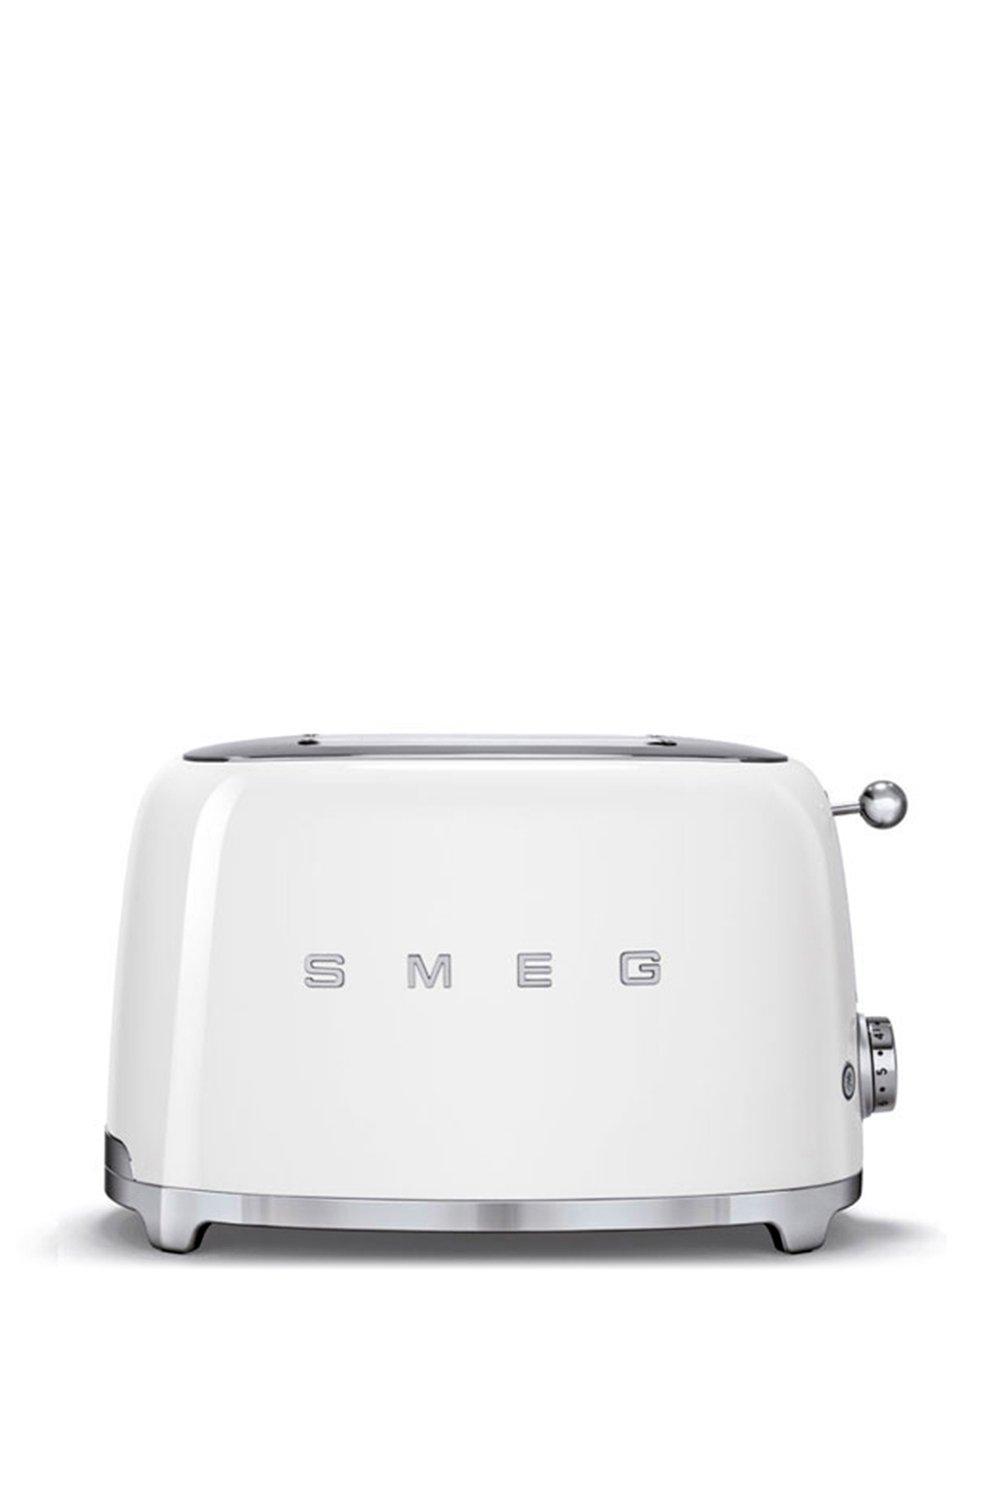 Daewoo SDA1060GE Glass Toaster 2 Slice with Wide Slot